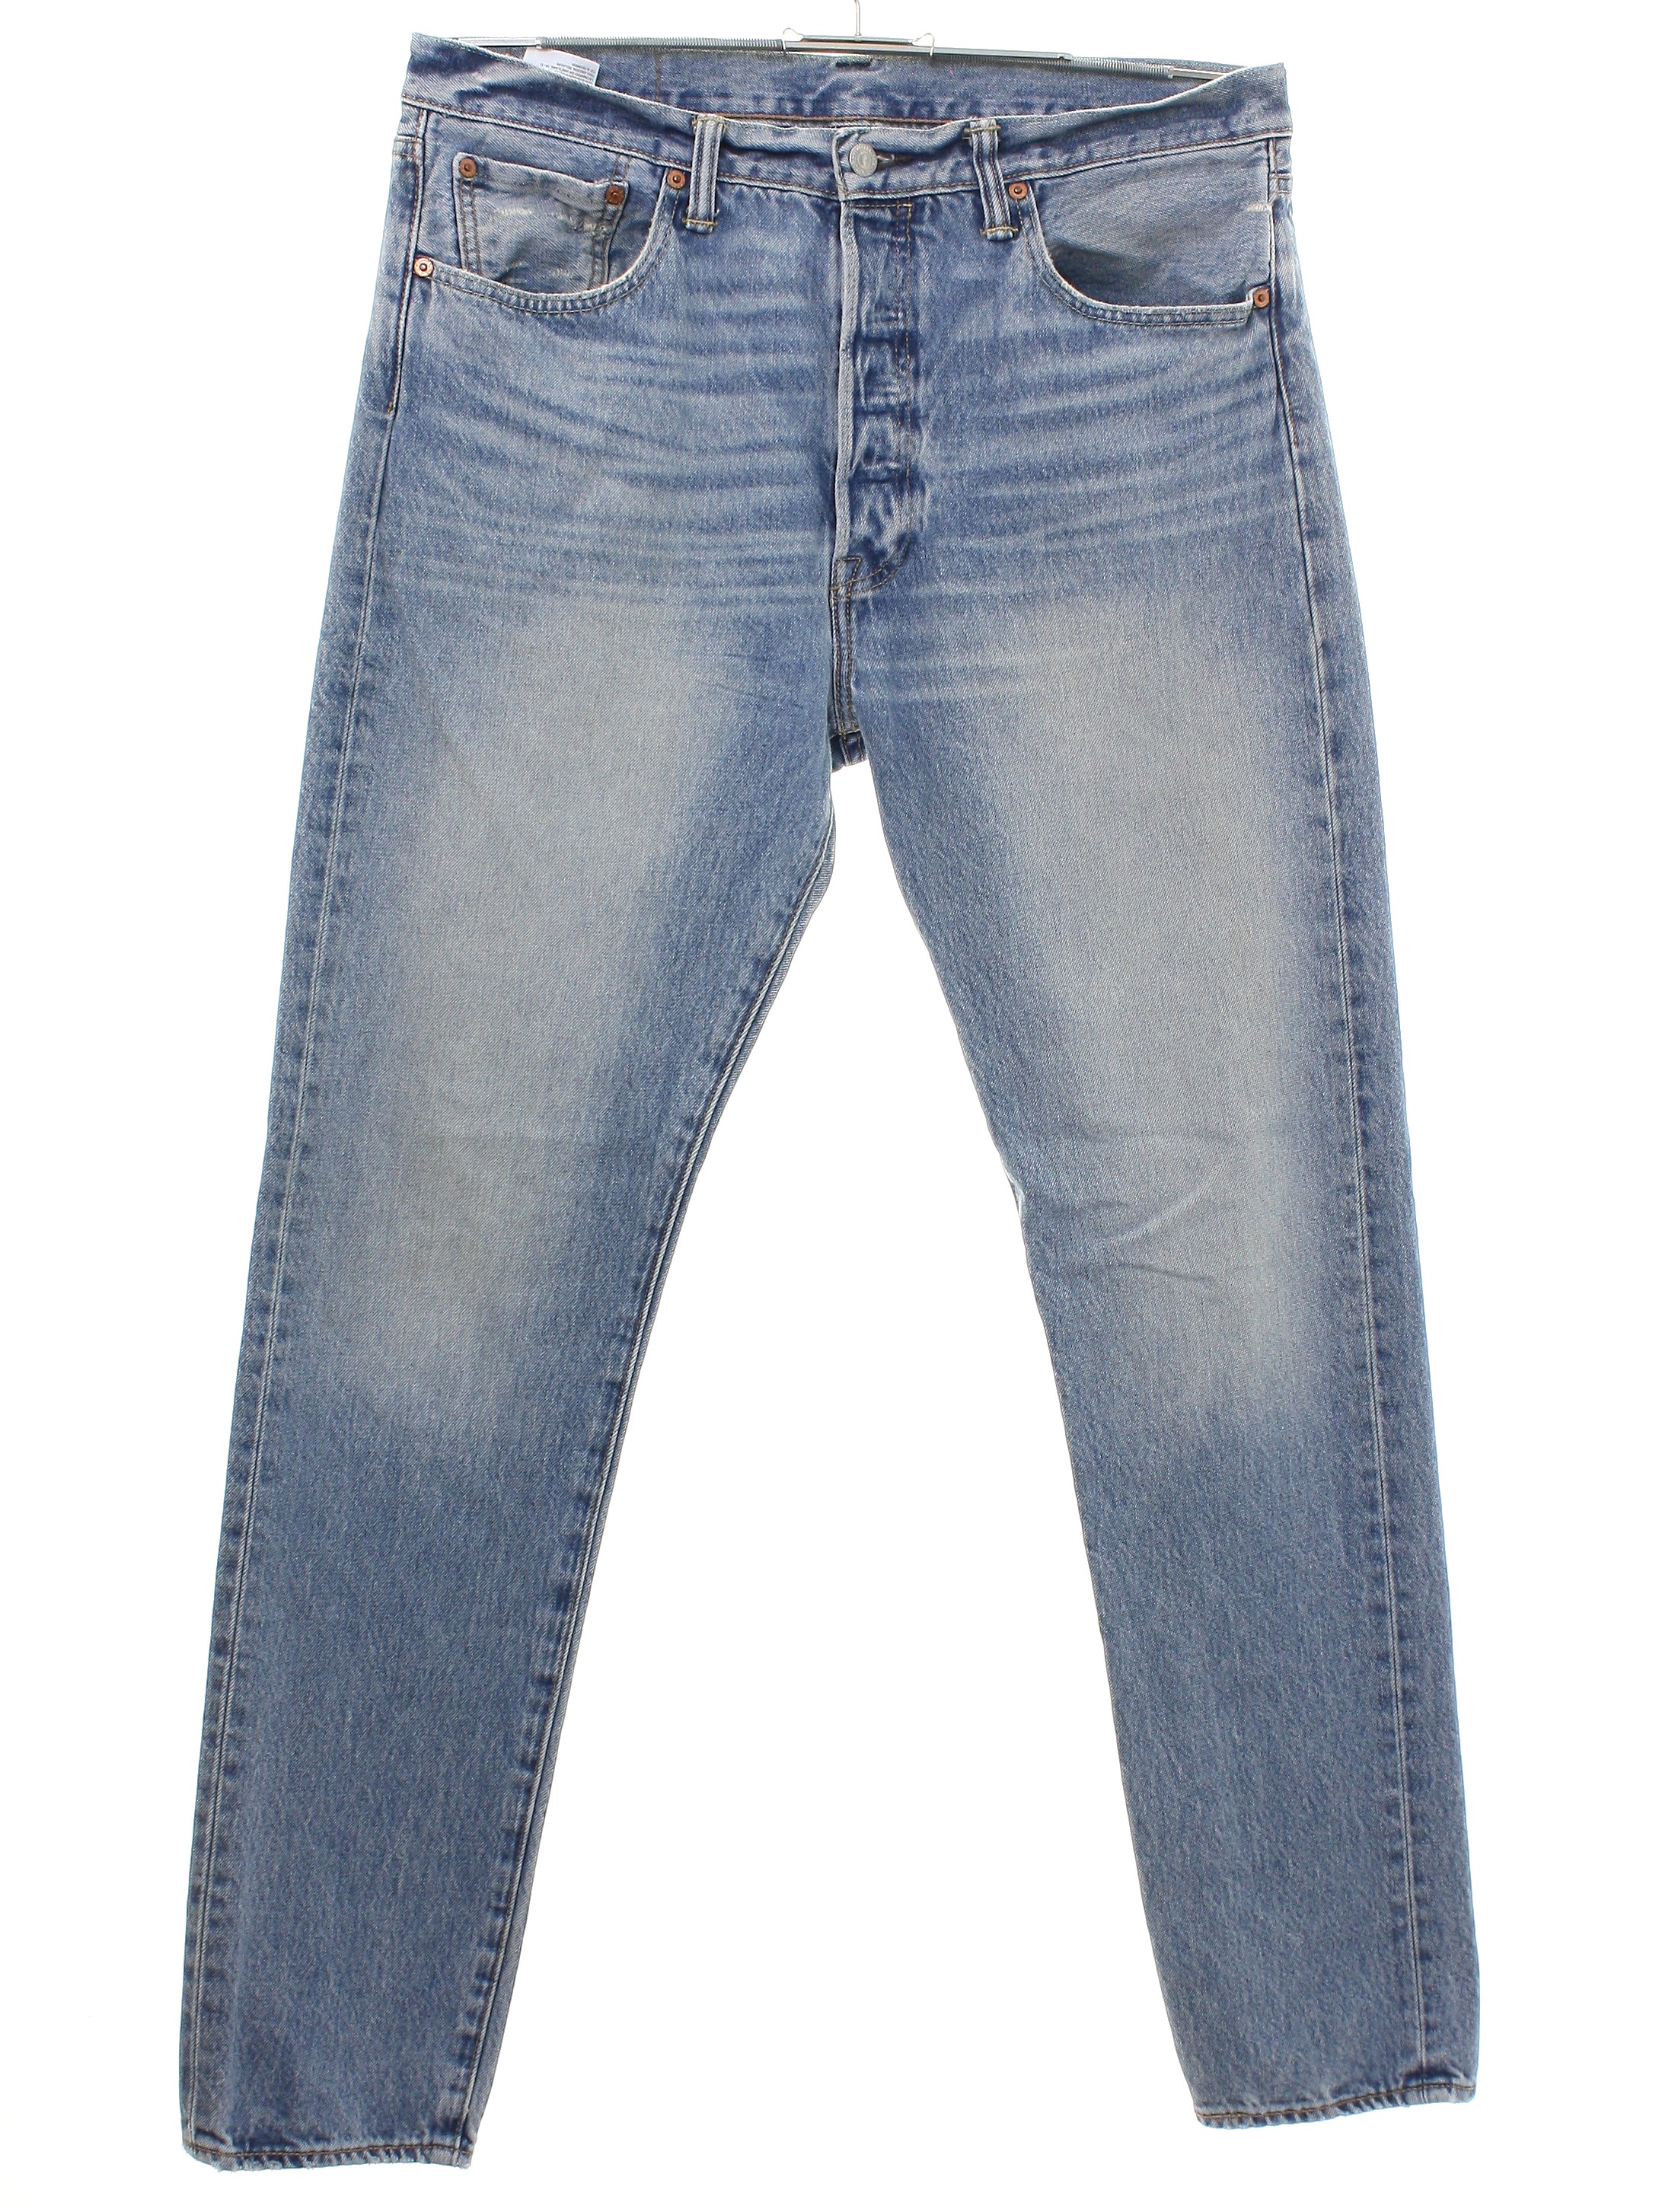 Pants: 90s -Levis 501 CT- Mens faded and worn light blue cotton denim ...